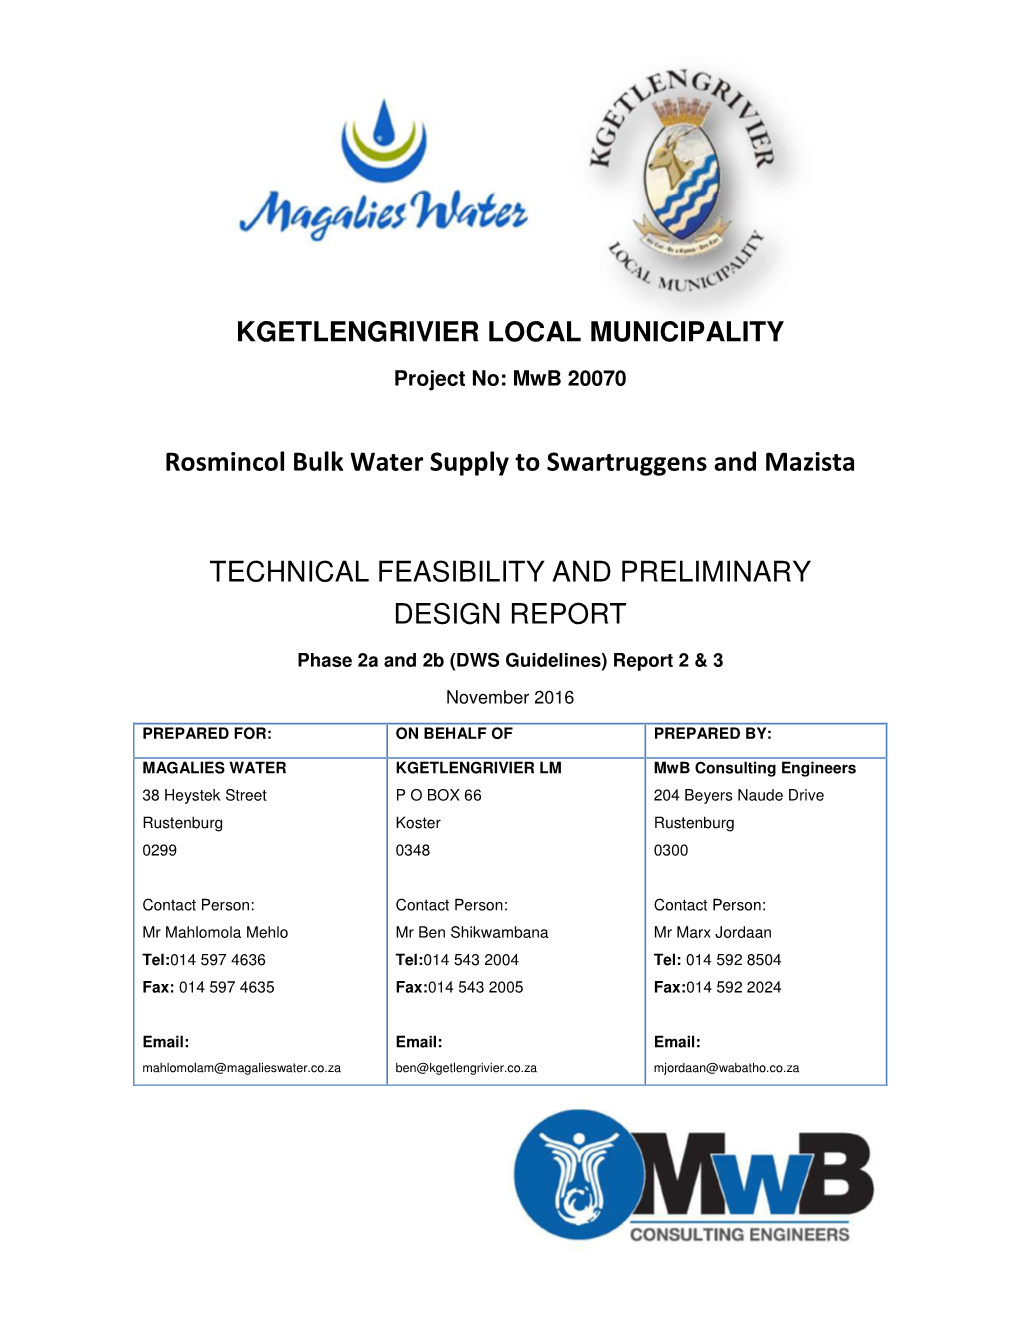 Rosmincol Bulk Water Supply to Swartruggens and Mazista